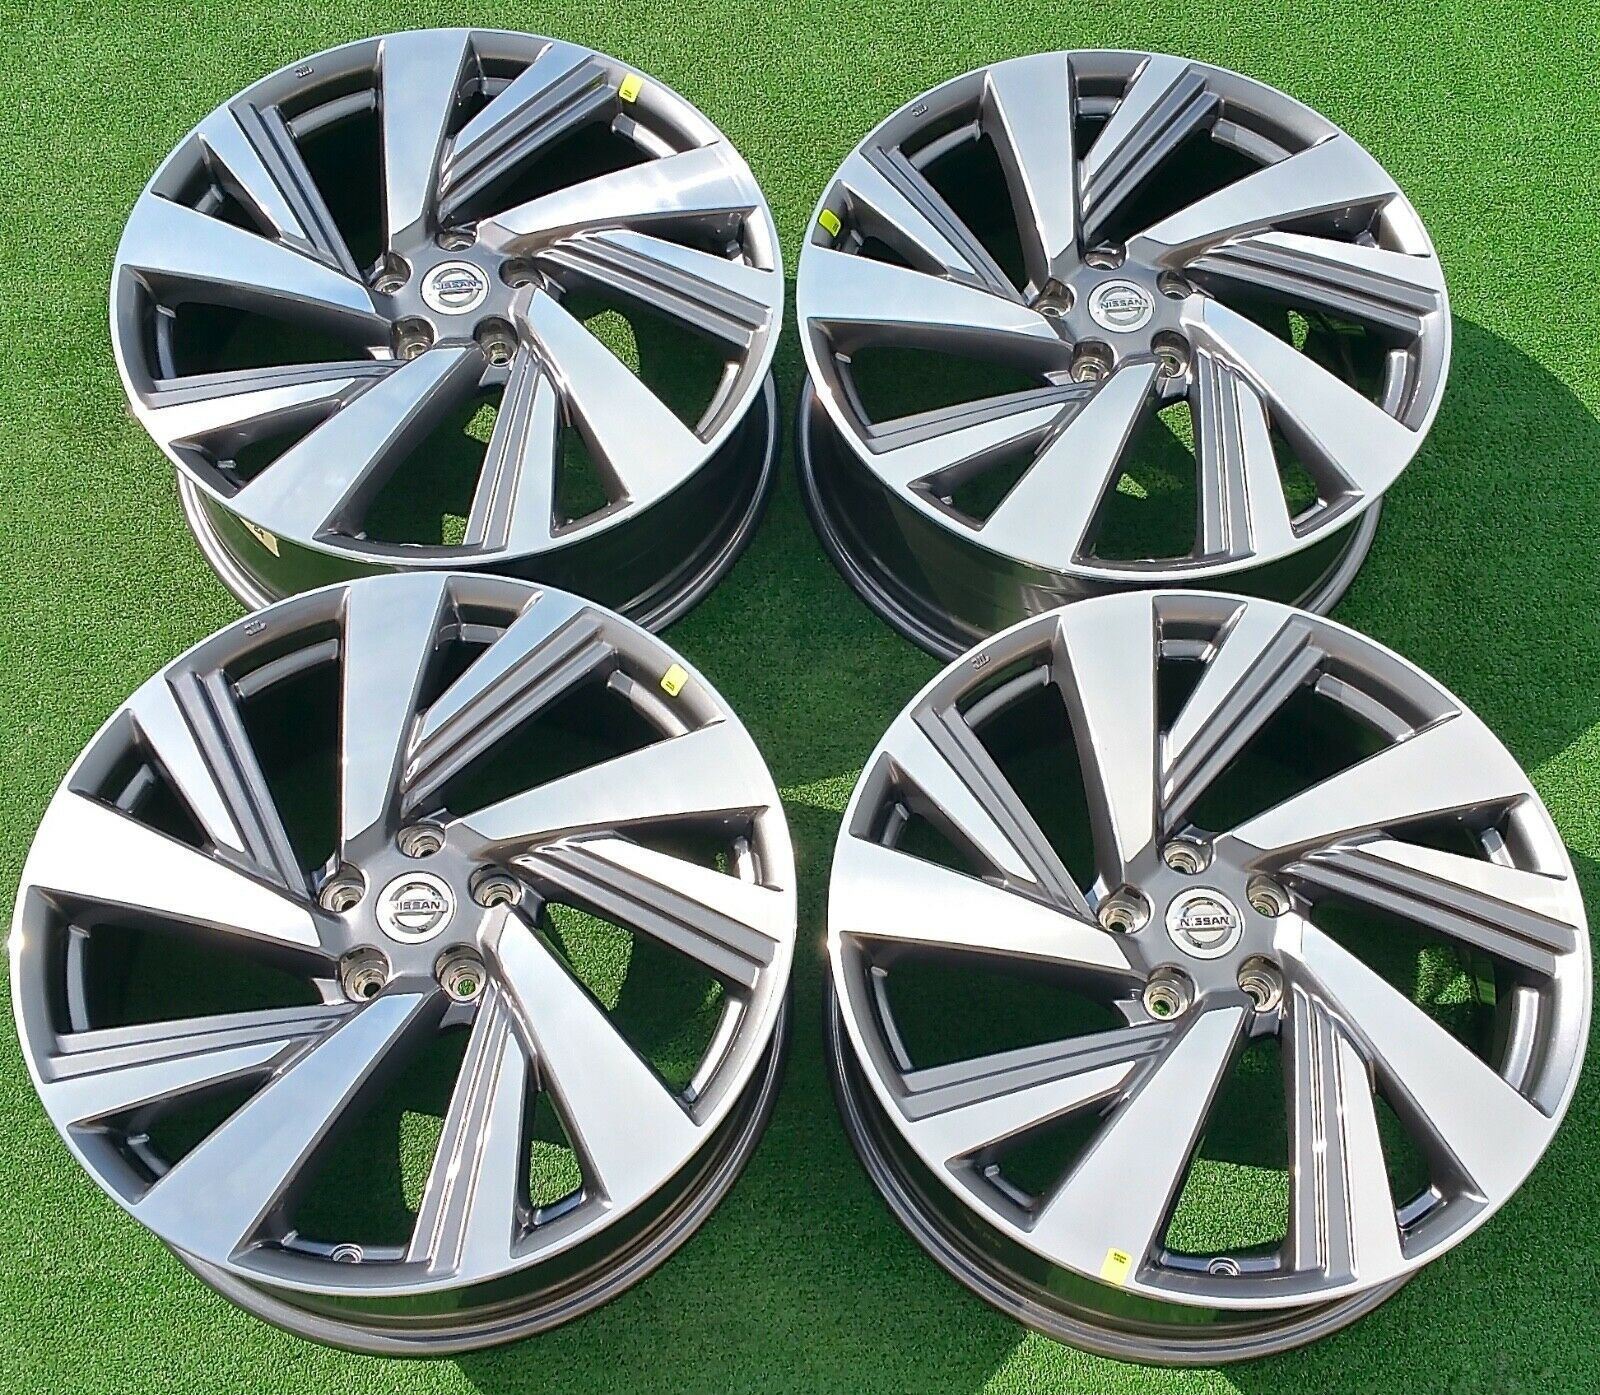 4 Factory Nissan Murano Wheels 20 inch Set Platinum Genuine Original OEM New